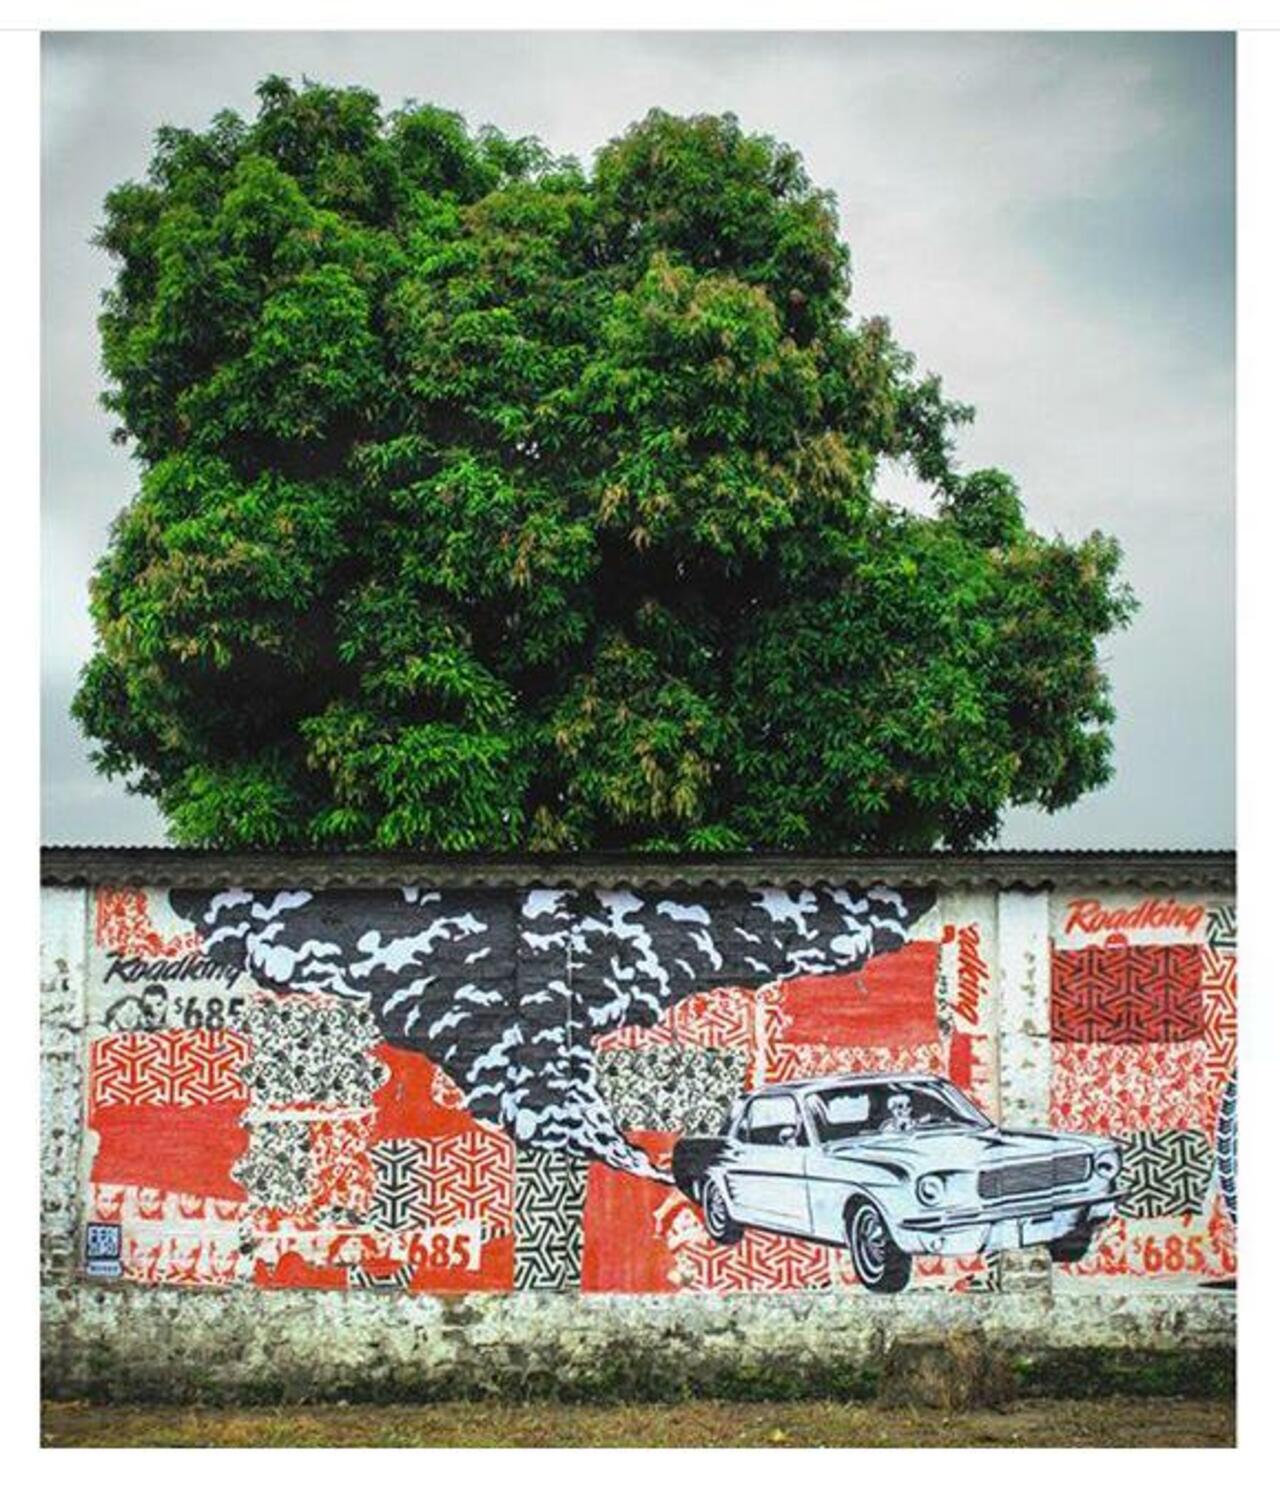 When Street Art meets nature by Ferizuku Kai in Colombia 

#art #arte #graffiti #streetart http://t.co/FFjMfagklV